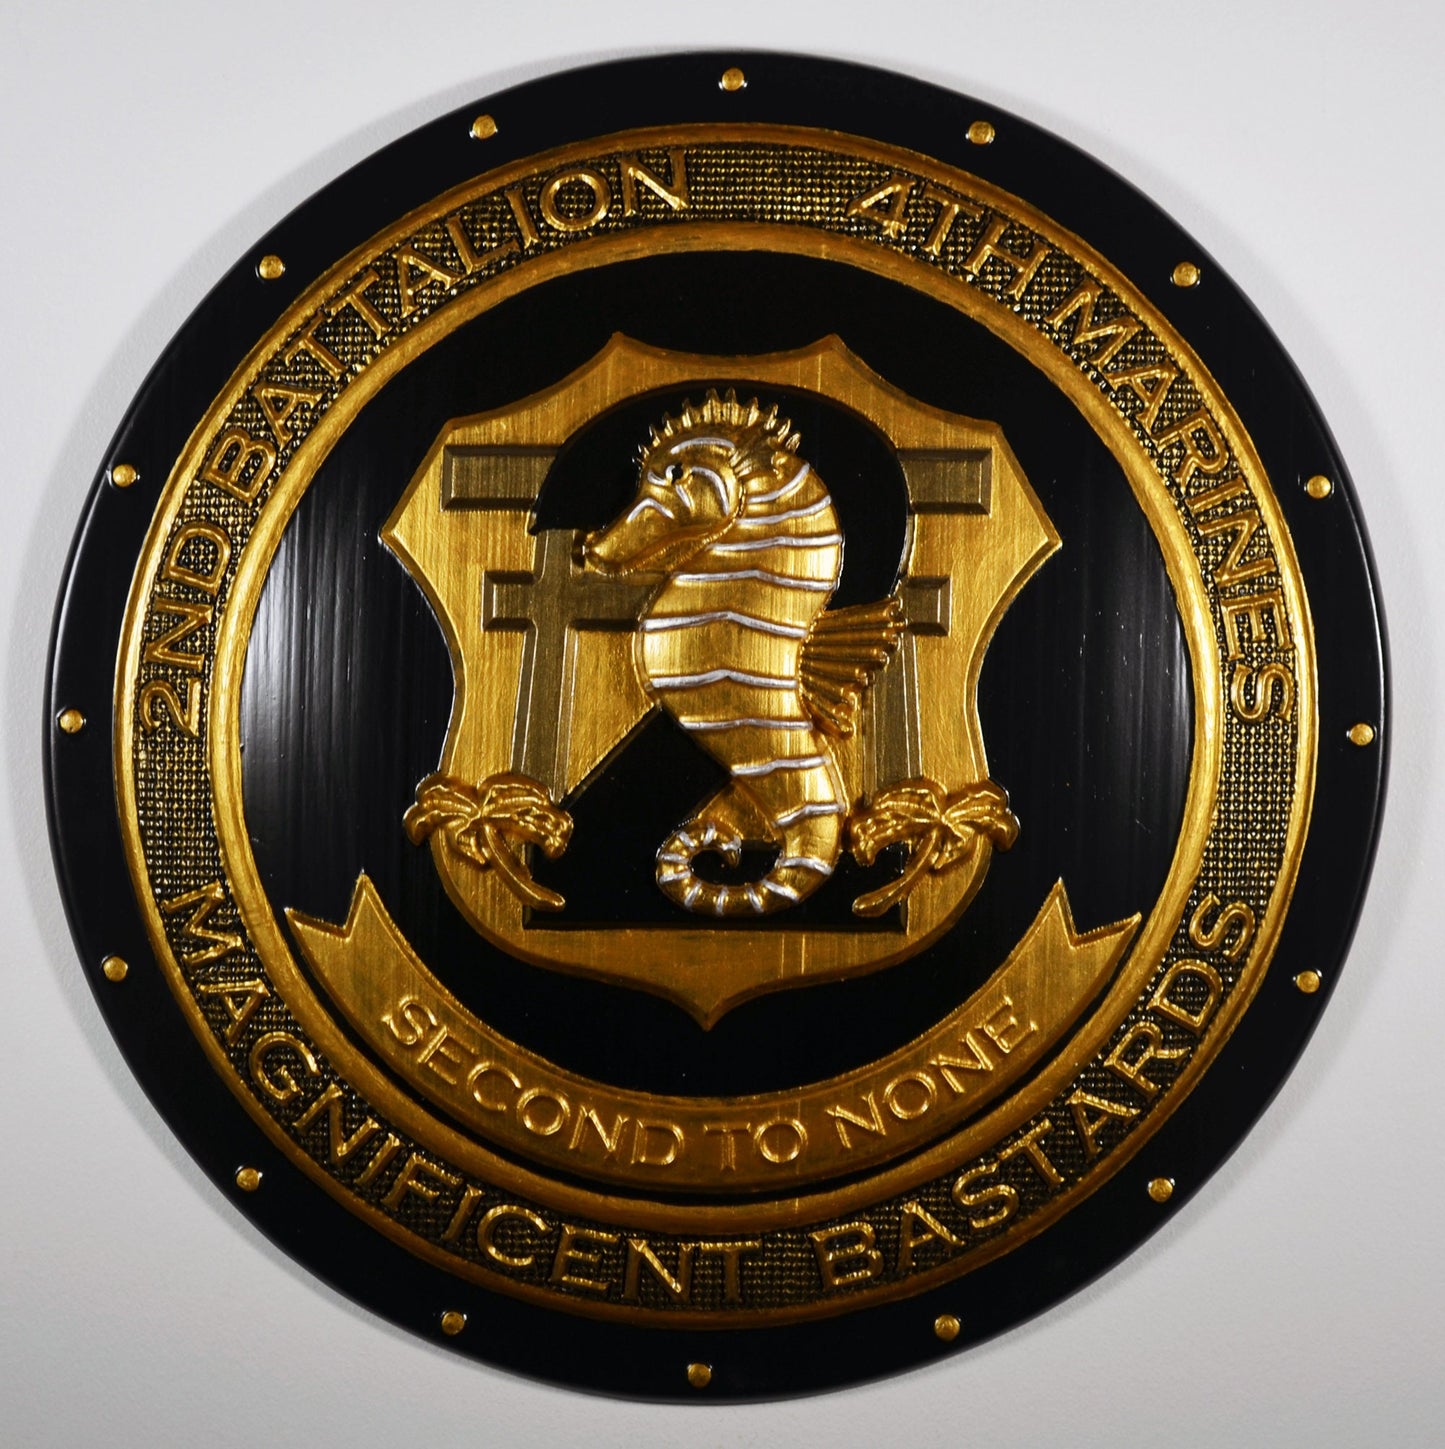 USMC 2nd Battalion 4th Marines, Unit Emblem, US Marine Corps, Gold Shield, military plaque